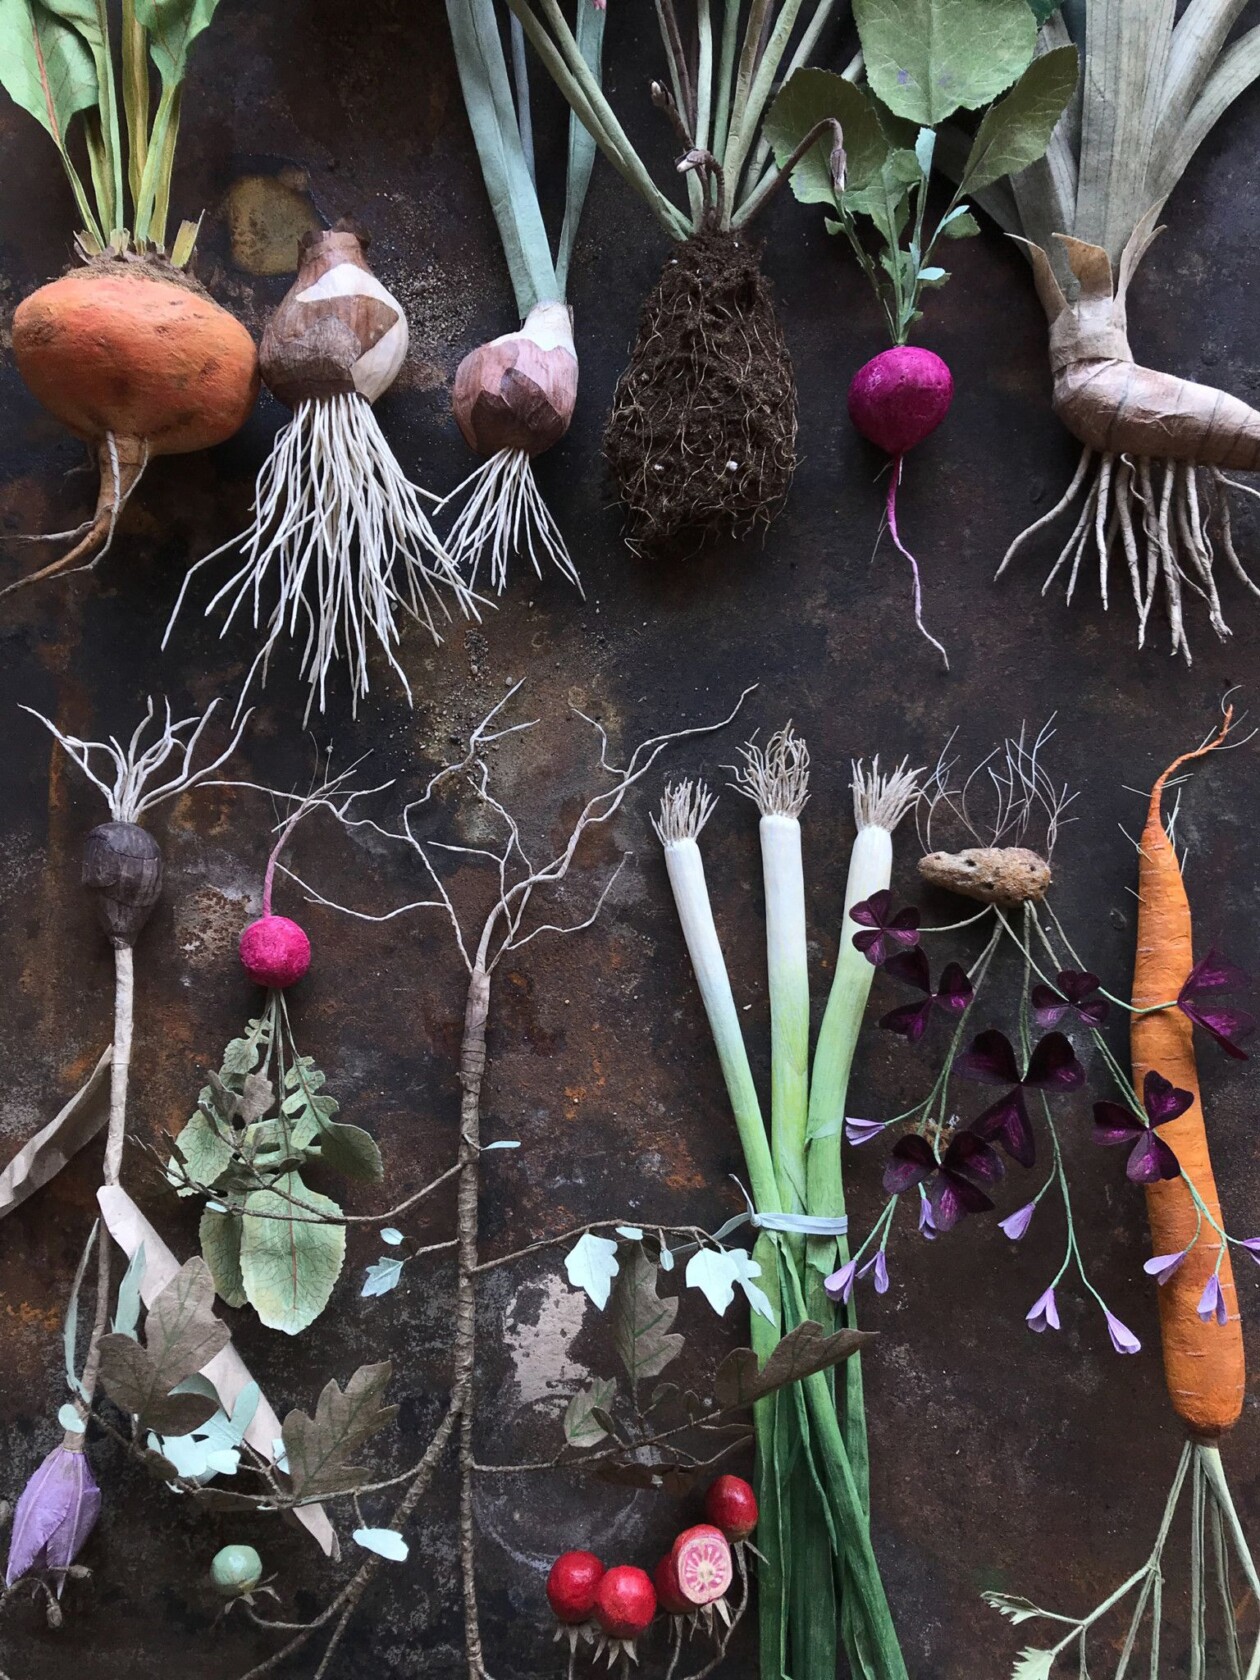 Splendid Lifelike Paper Sculptures Of Animals, Plants, Vegetables, And Mushrooms By ann Wood (17)